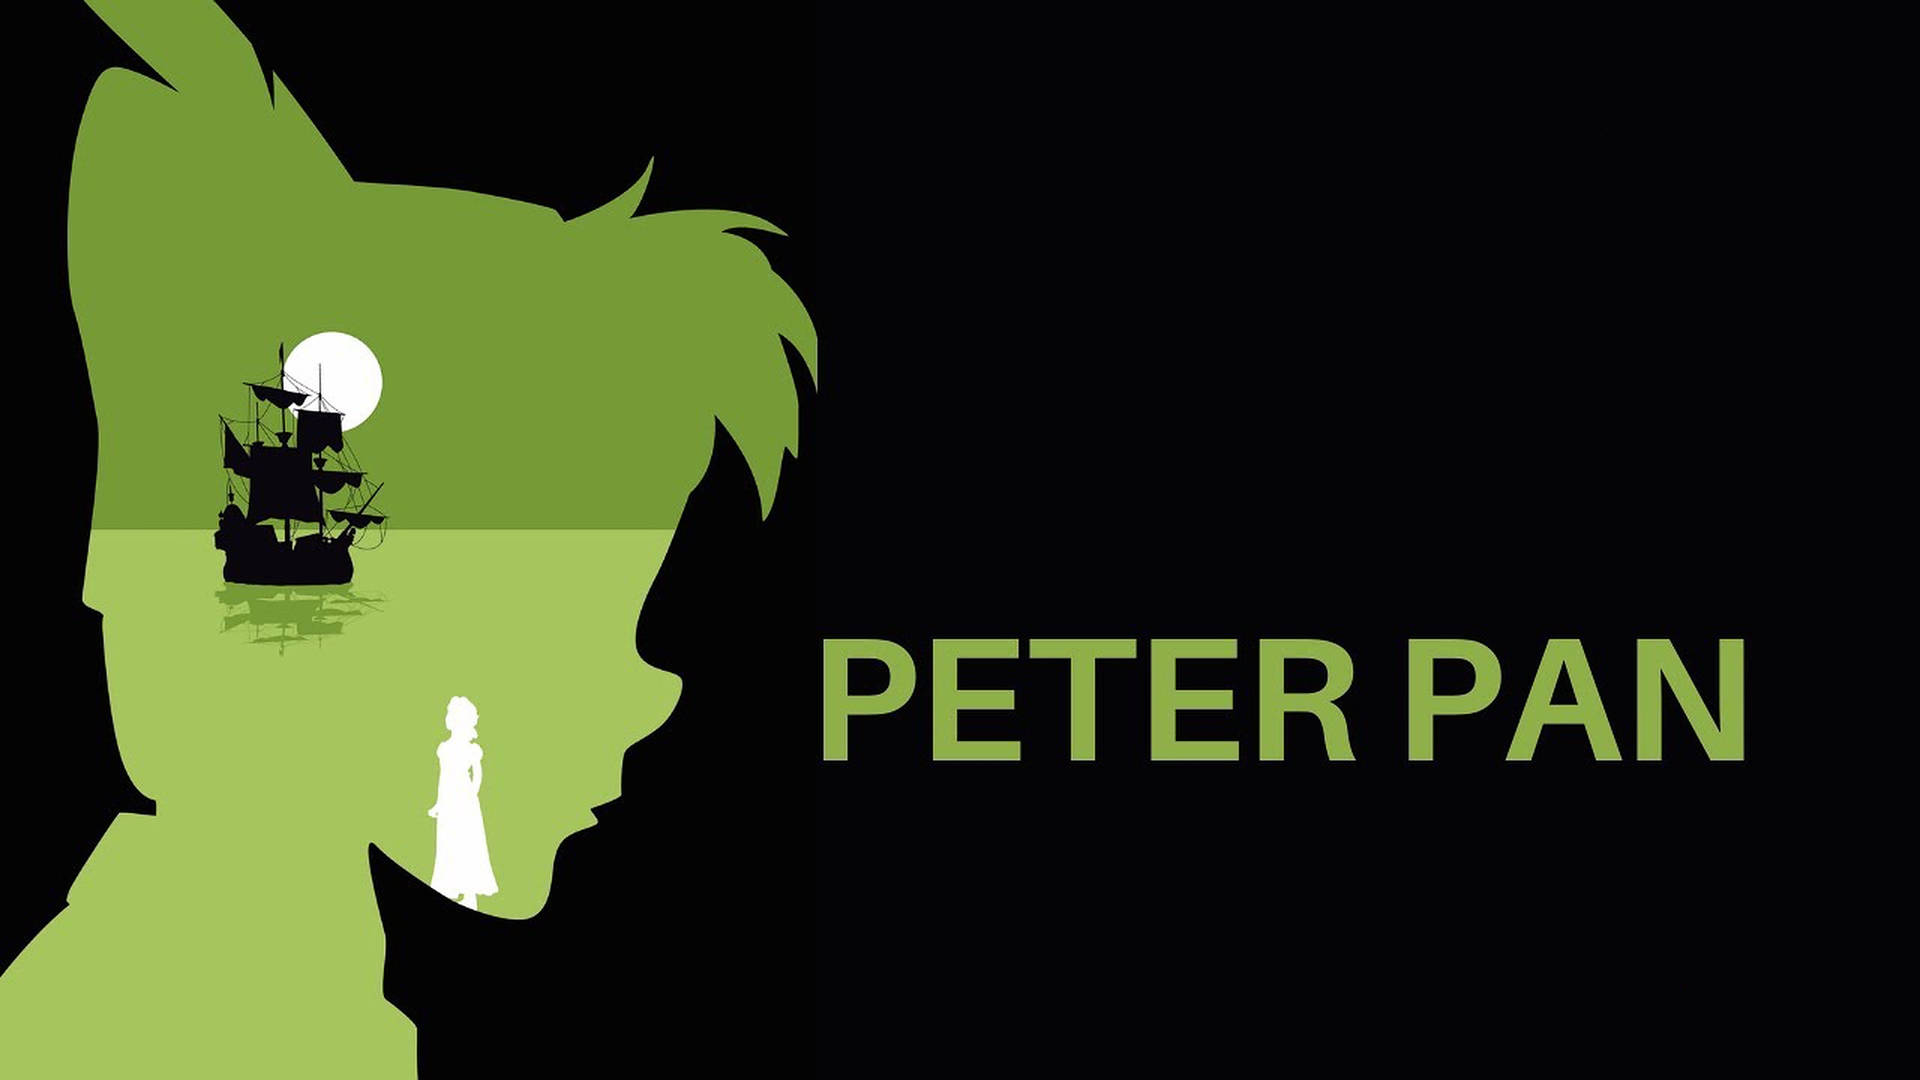 Peter Pan Green Silhouette